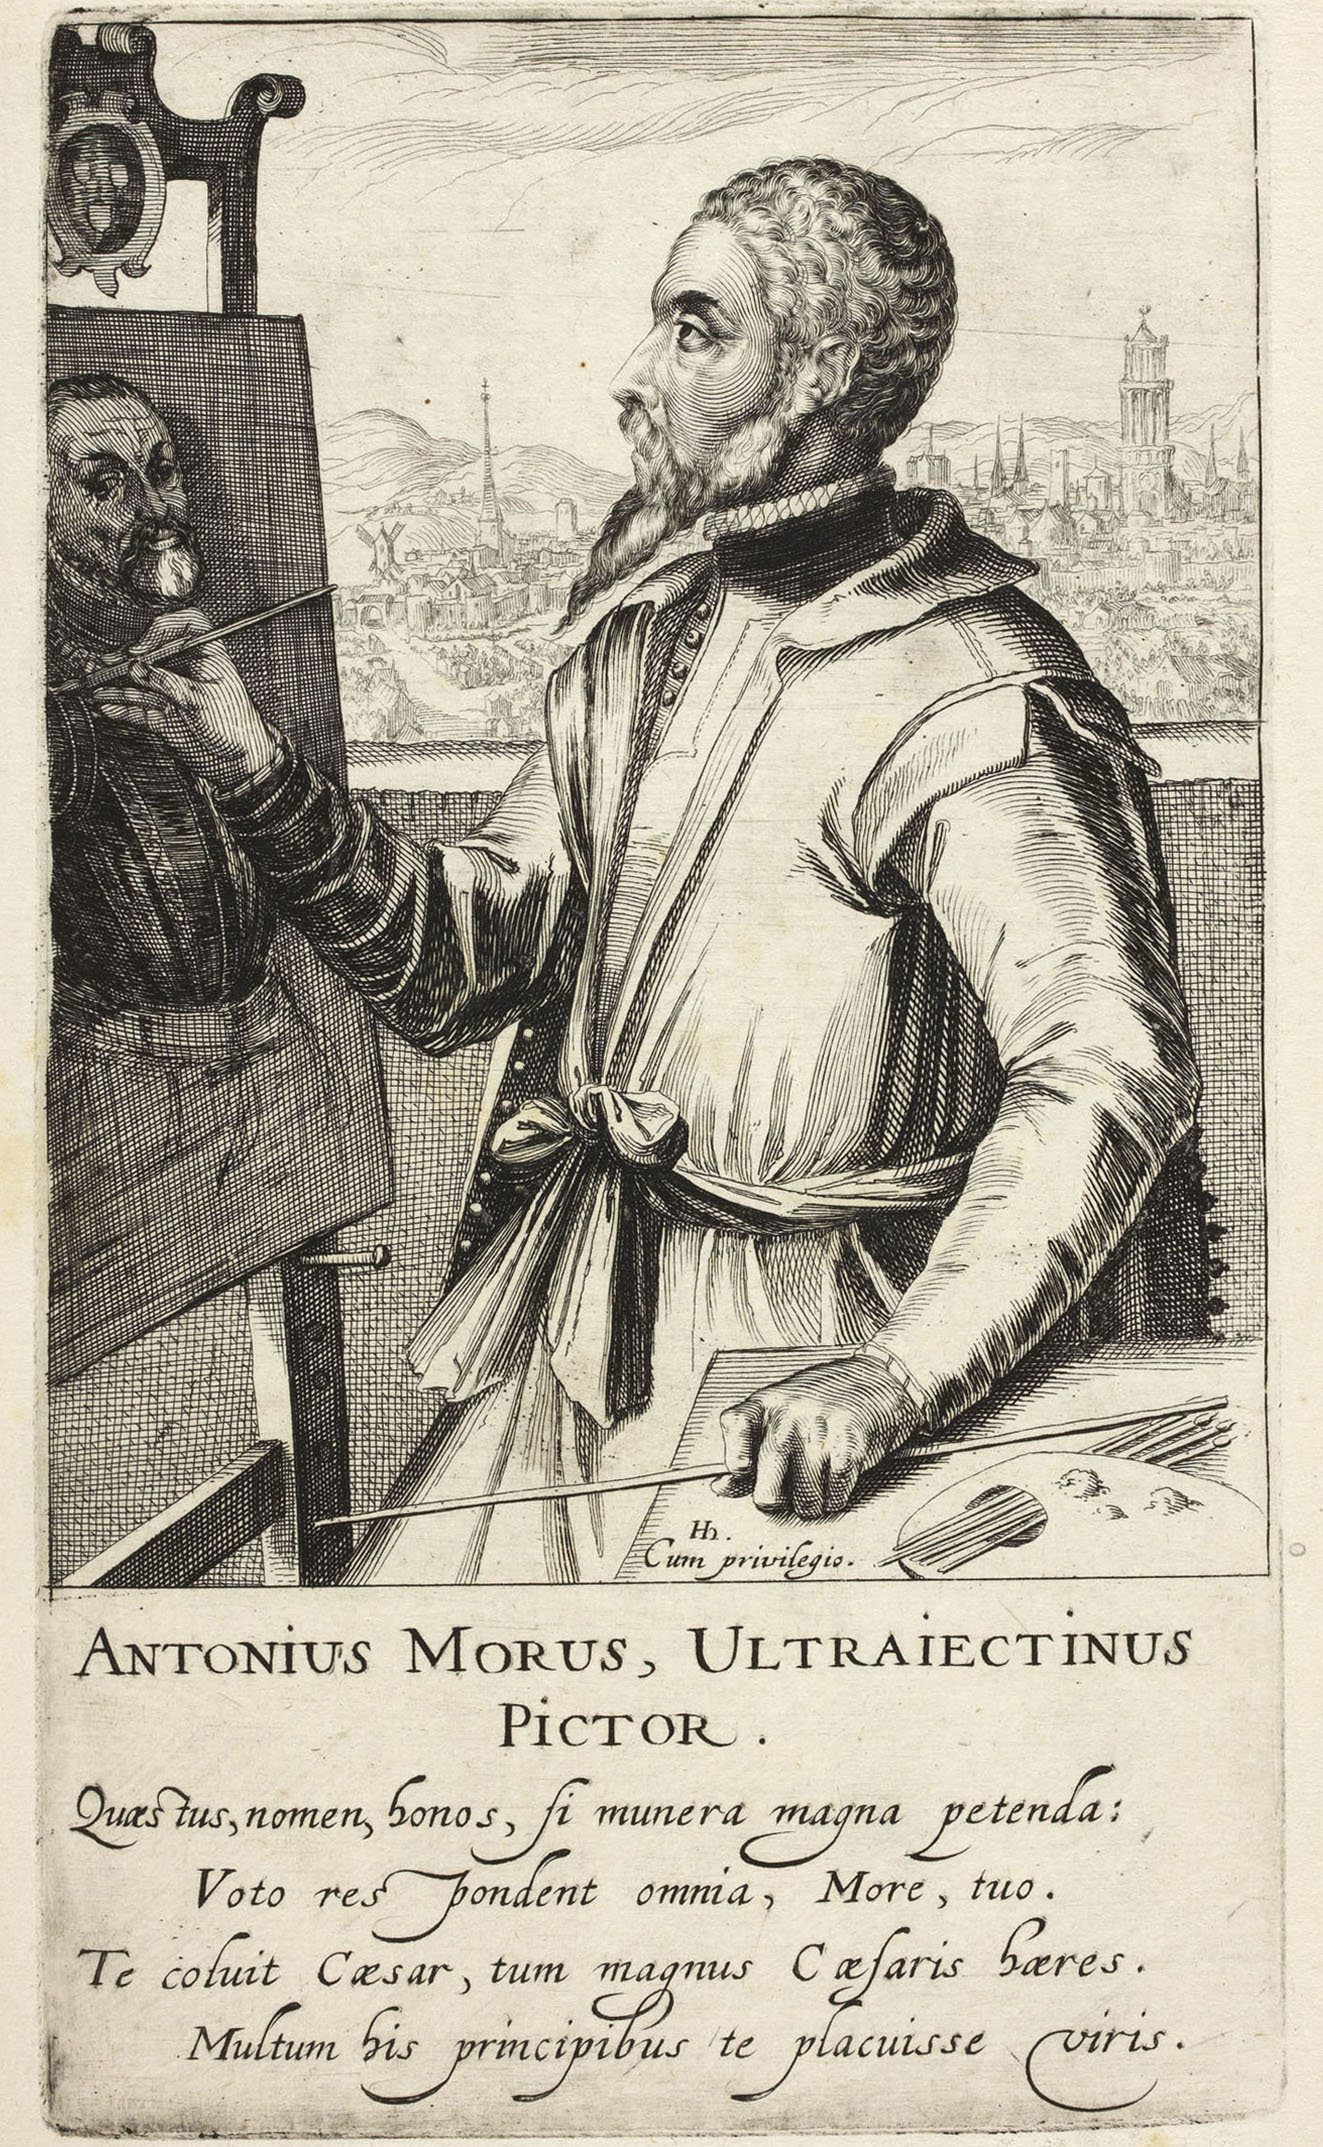 Anthonis Mor etching